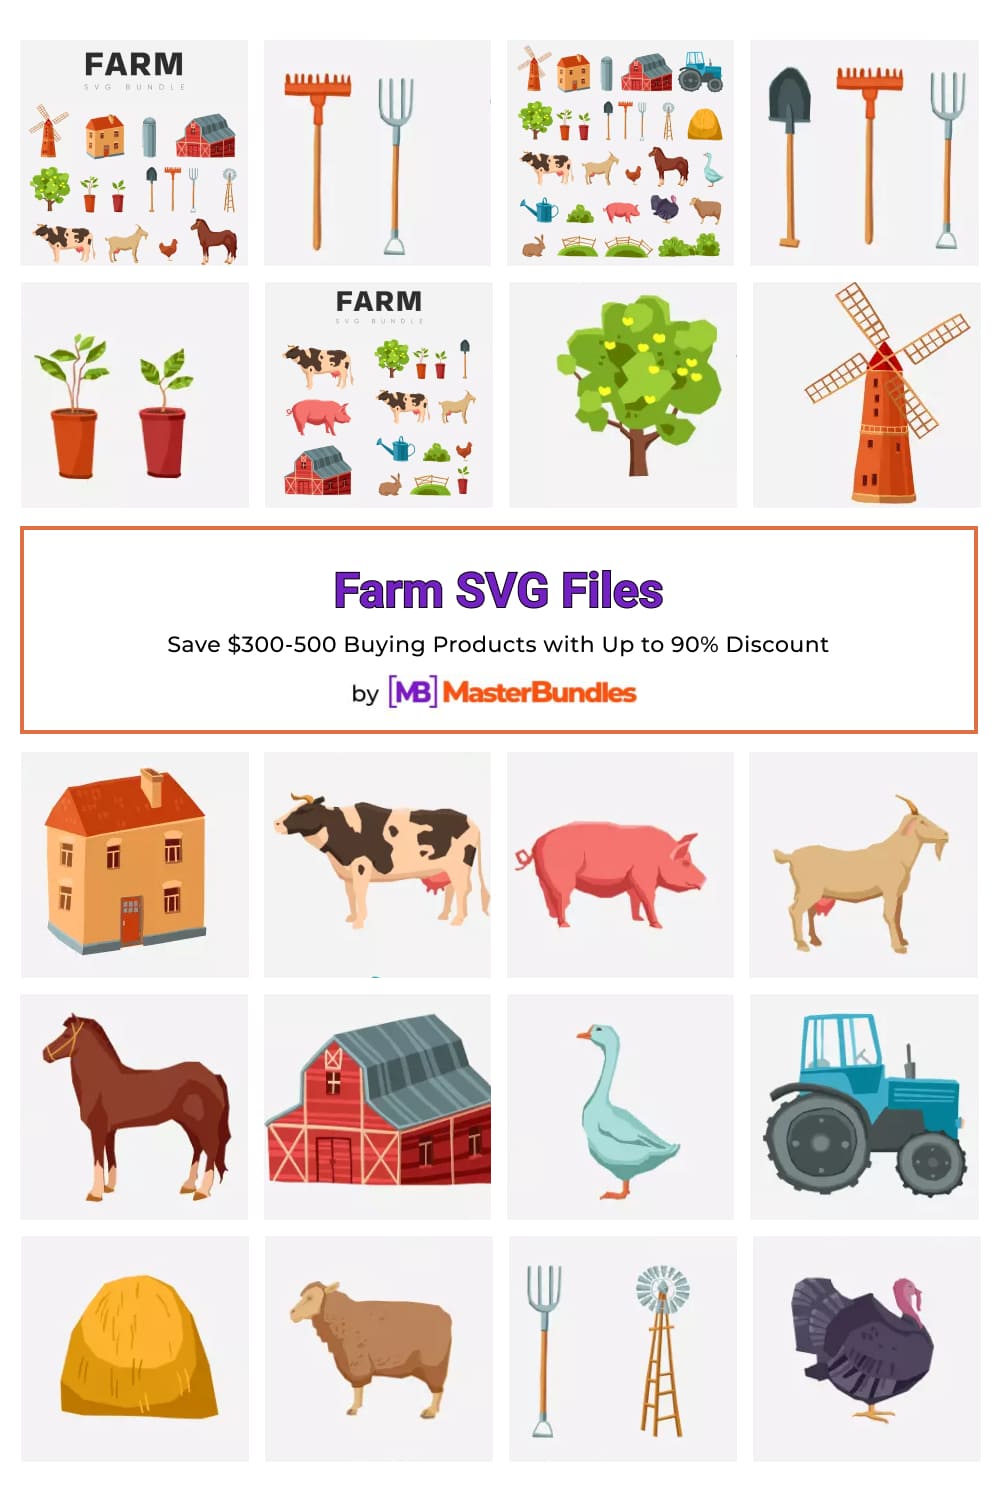 Farm SVG Files Pinterest image.